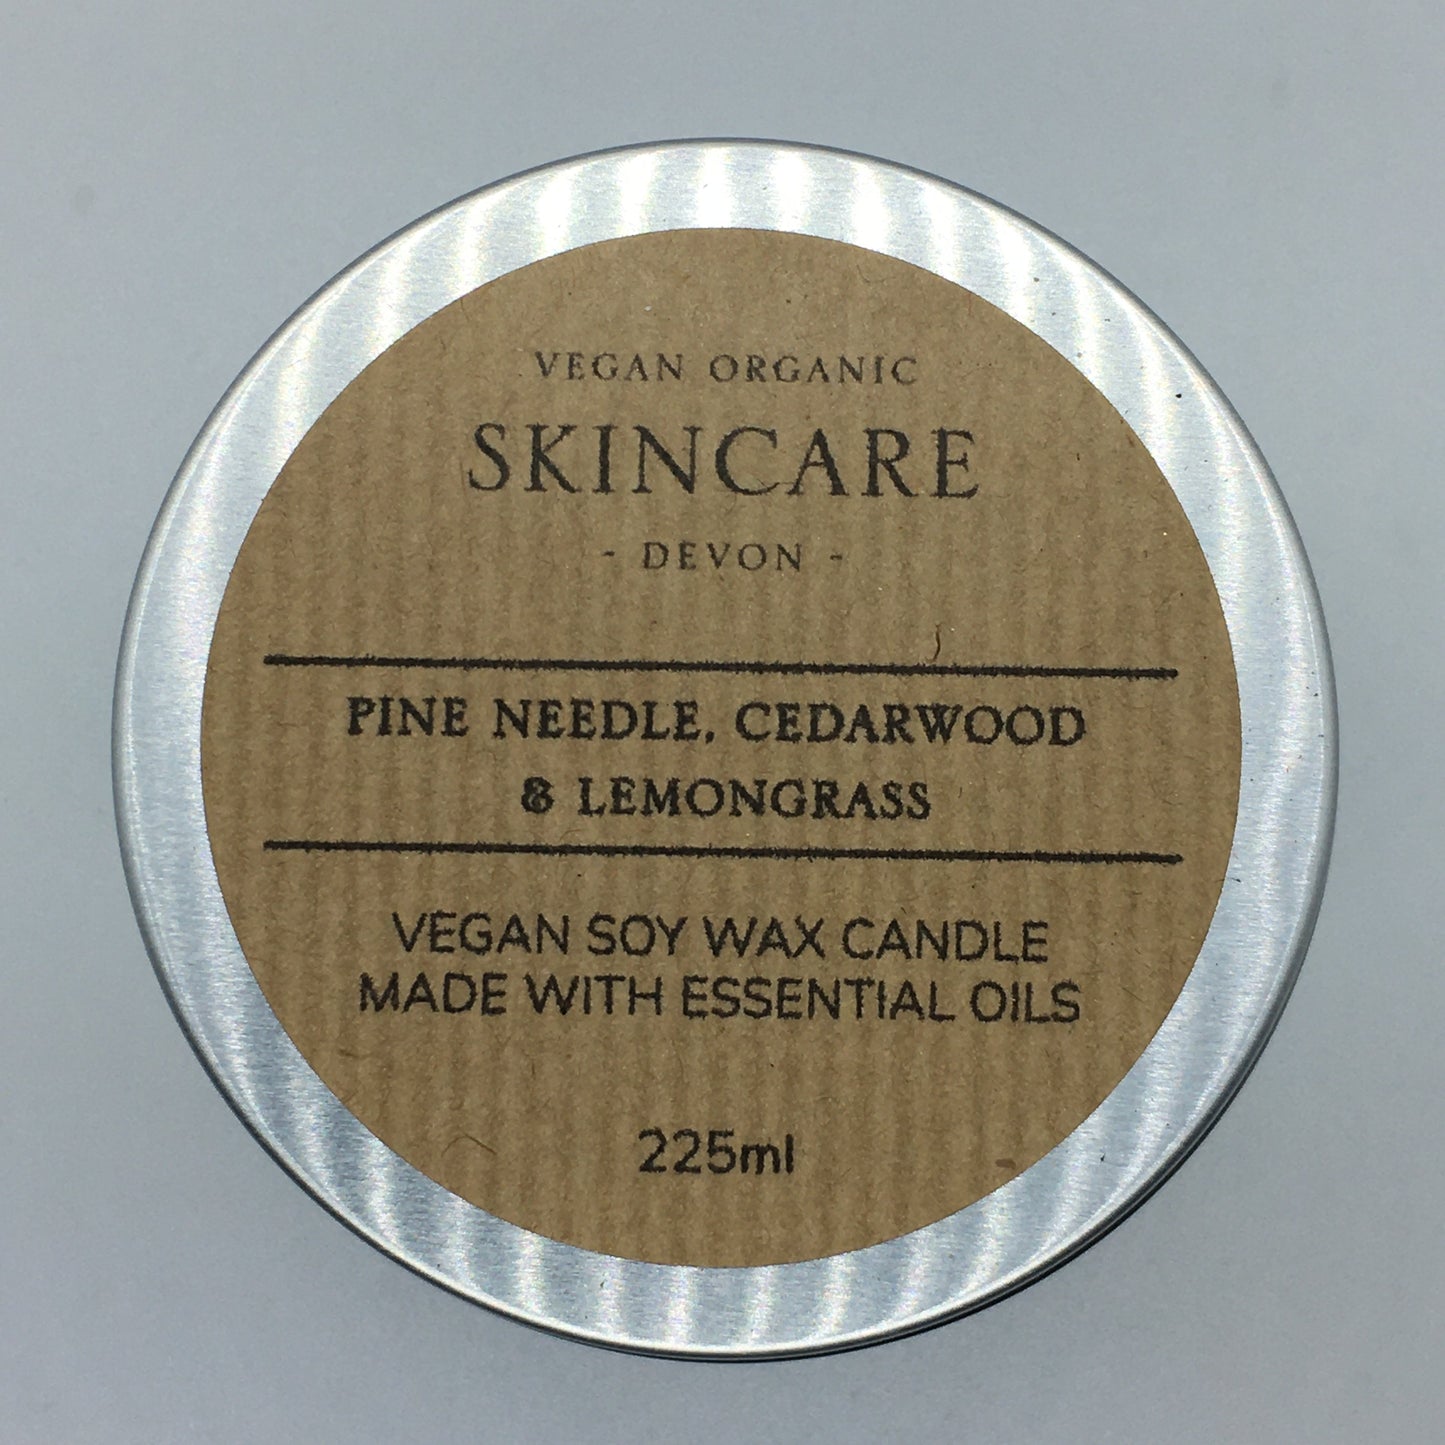 Pine Needle, Cedarwood & Lemongrass Aromatherapy Candle